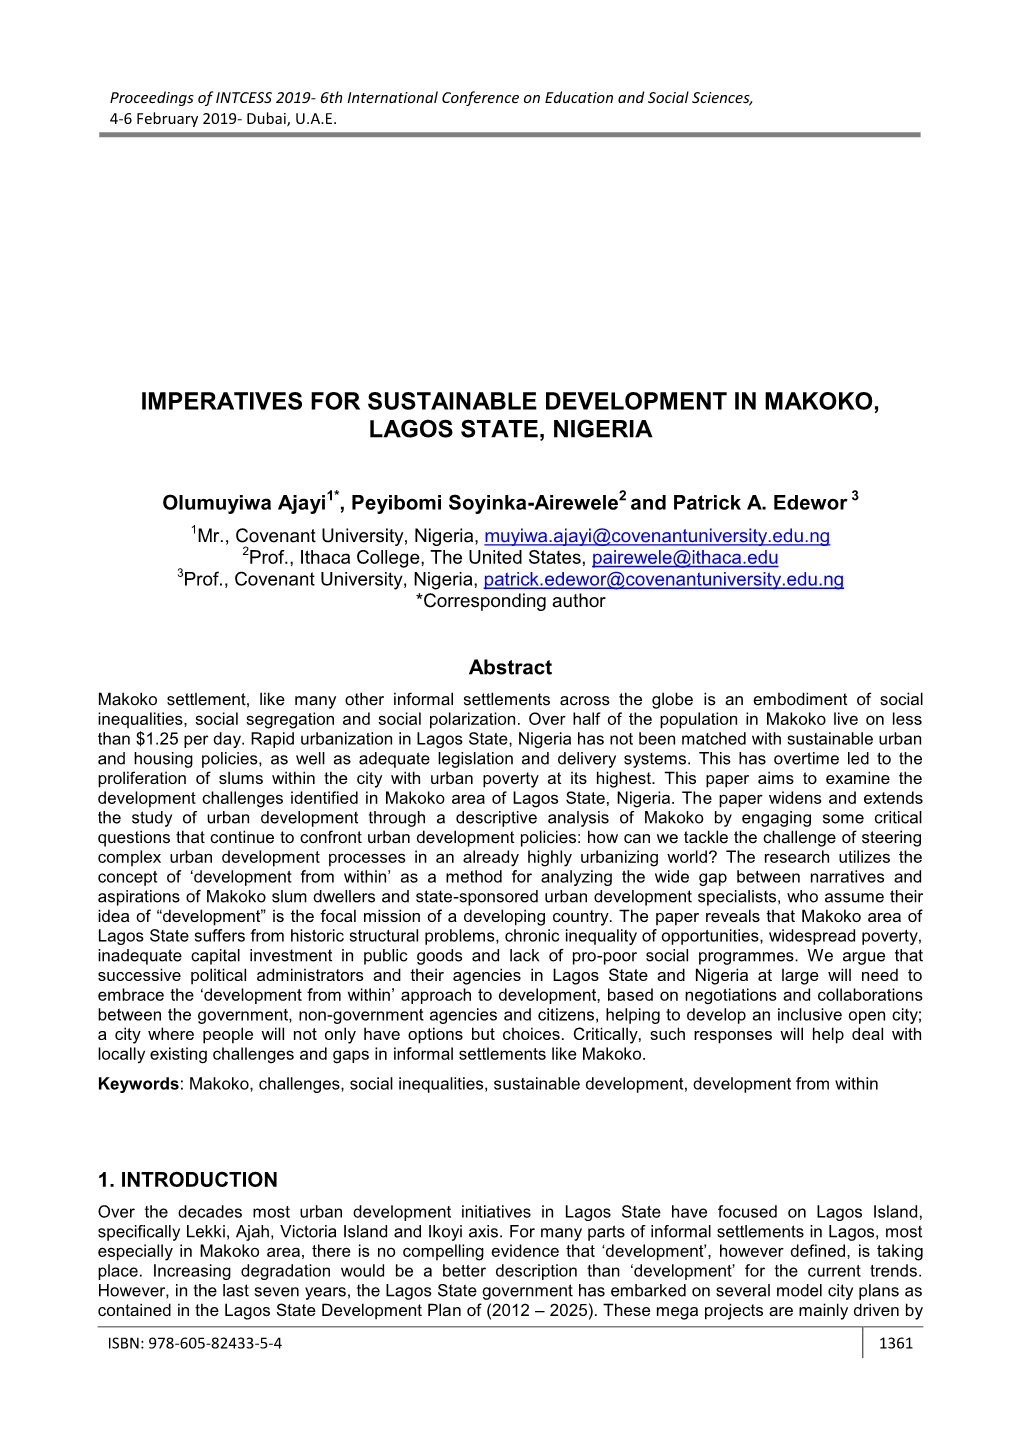 Imperatives for Sustainable Development in Makoko, Lagos State, Nigeria